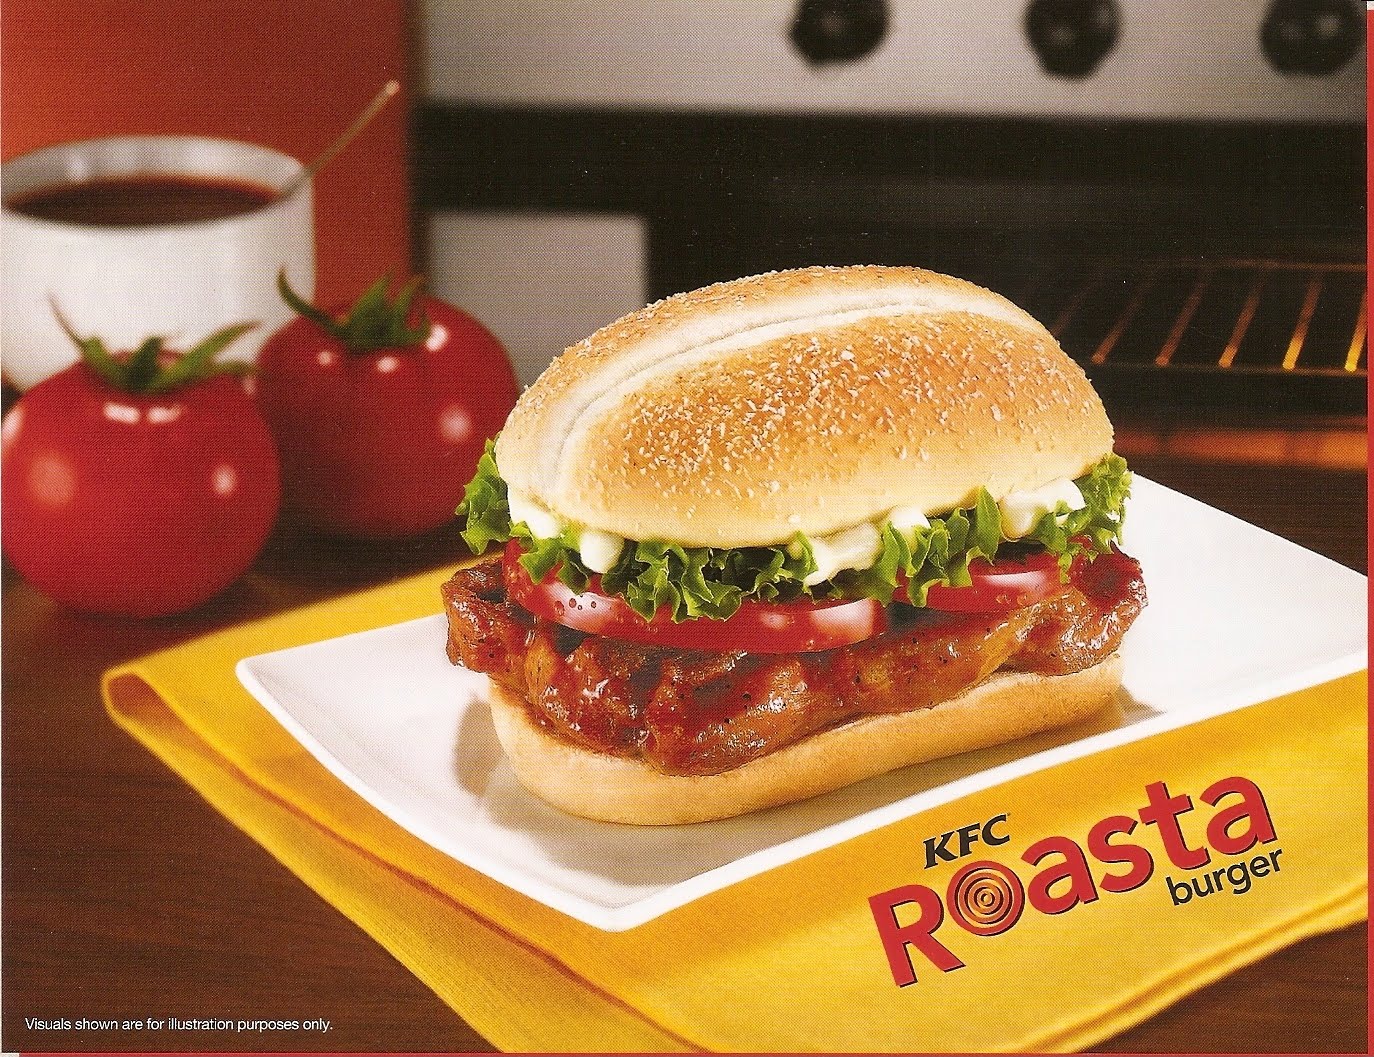 Interesting Green: Sizzling Succulence - KFC Roasta Burger